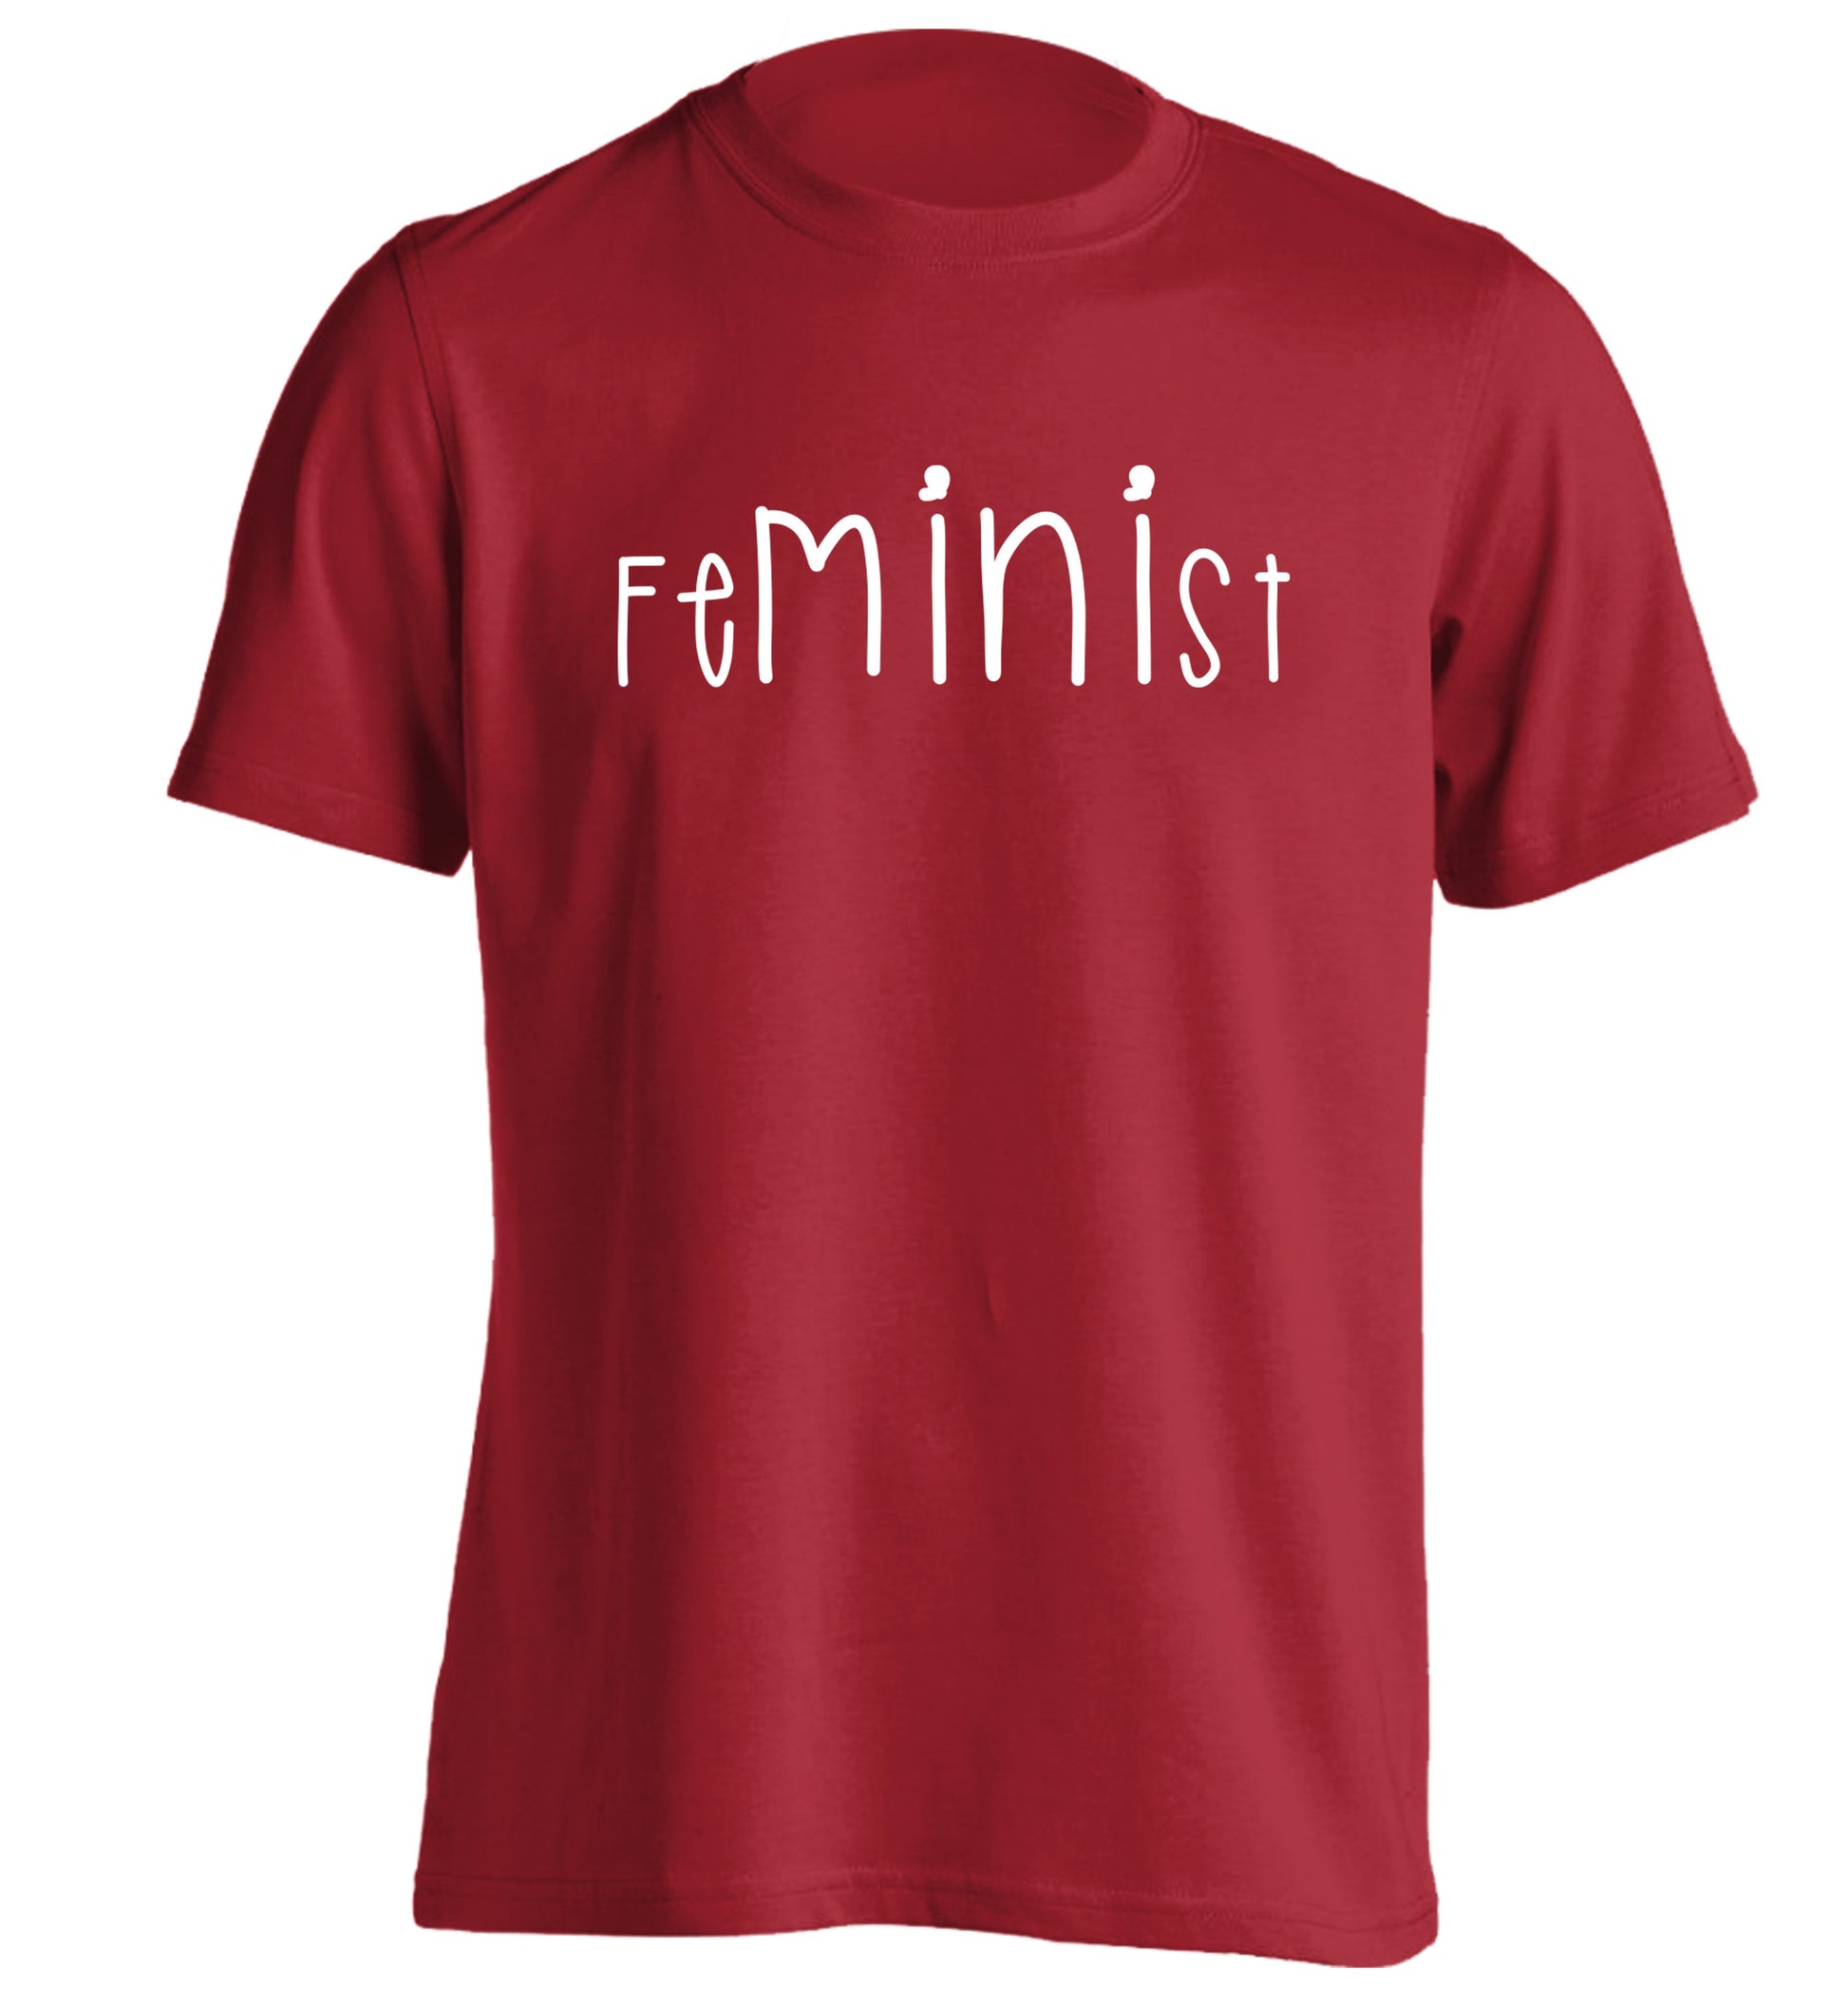 FeMINIst adults unisex red Tshirt 2XL